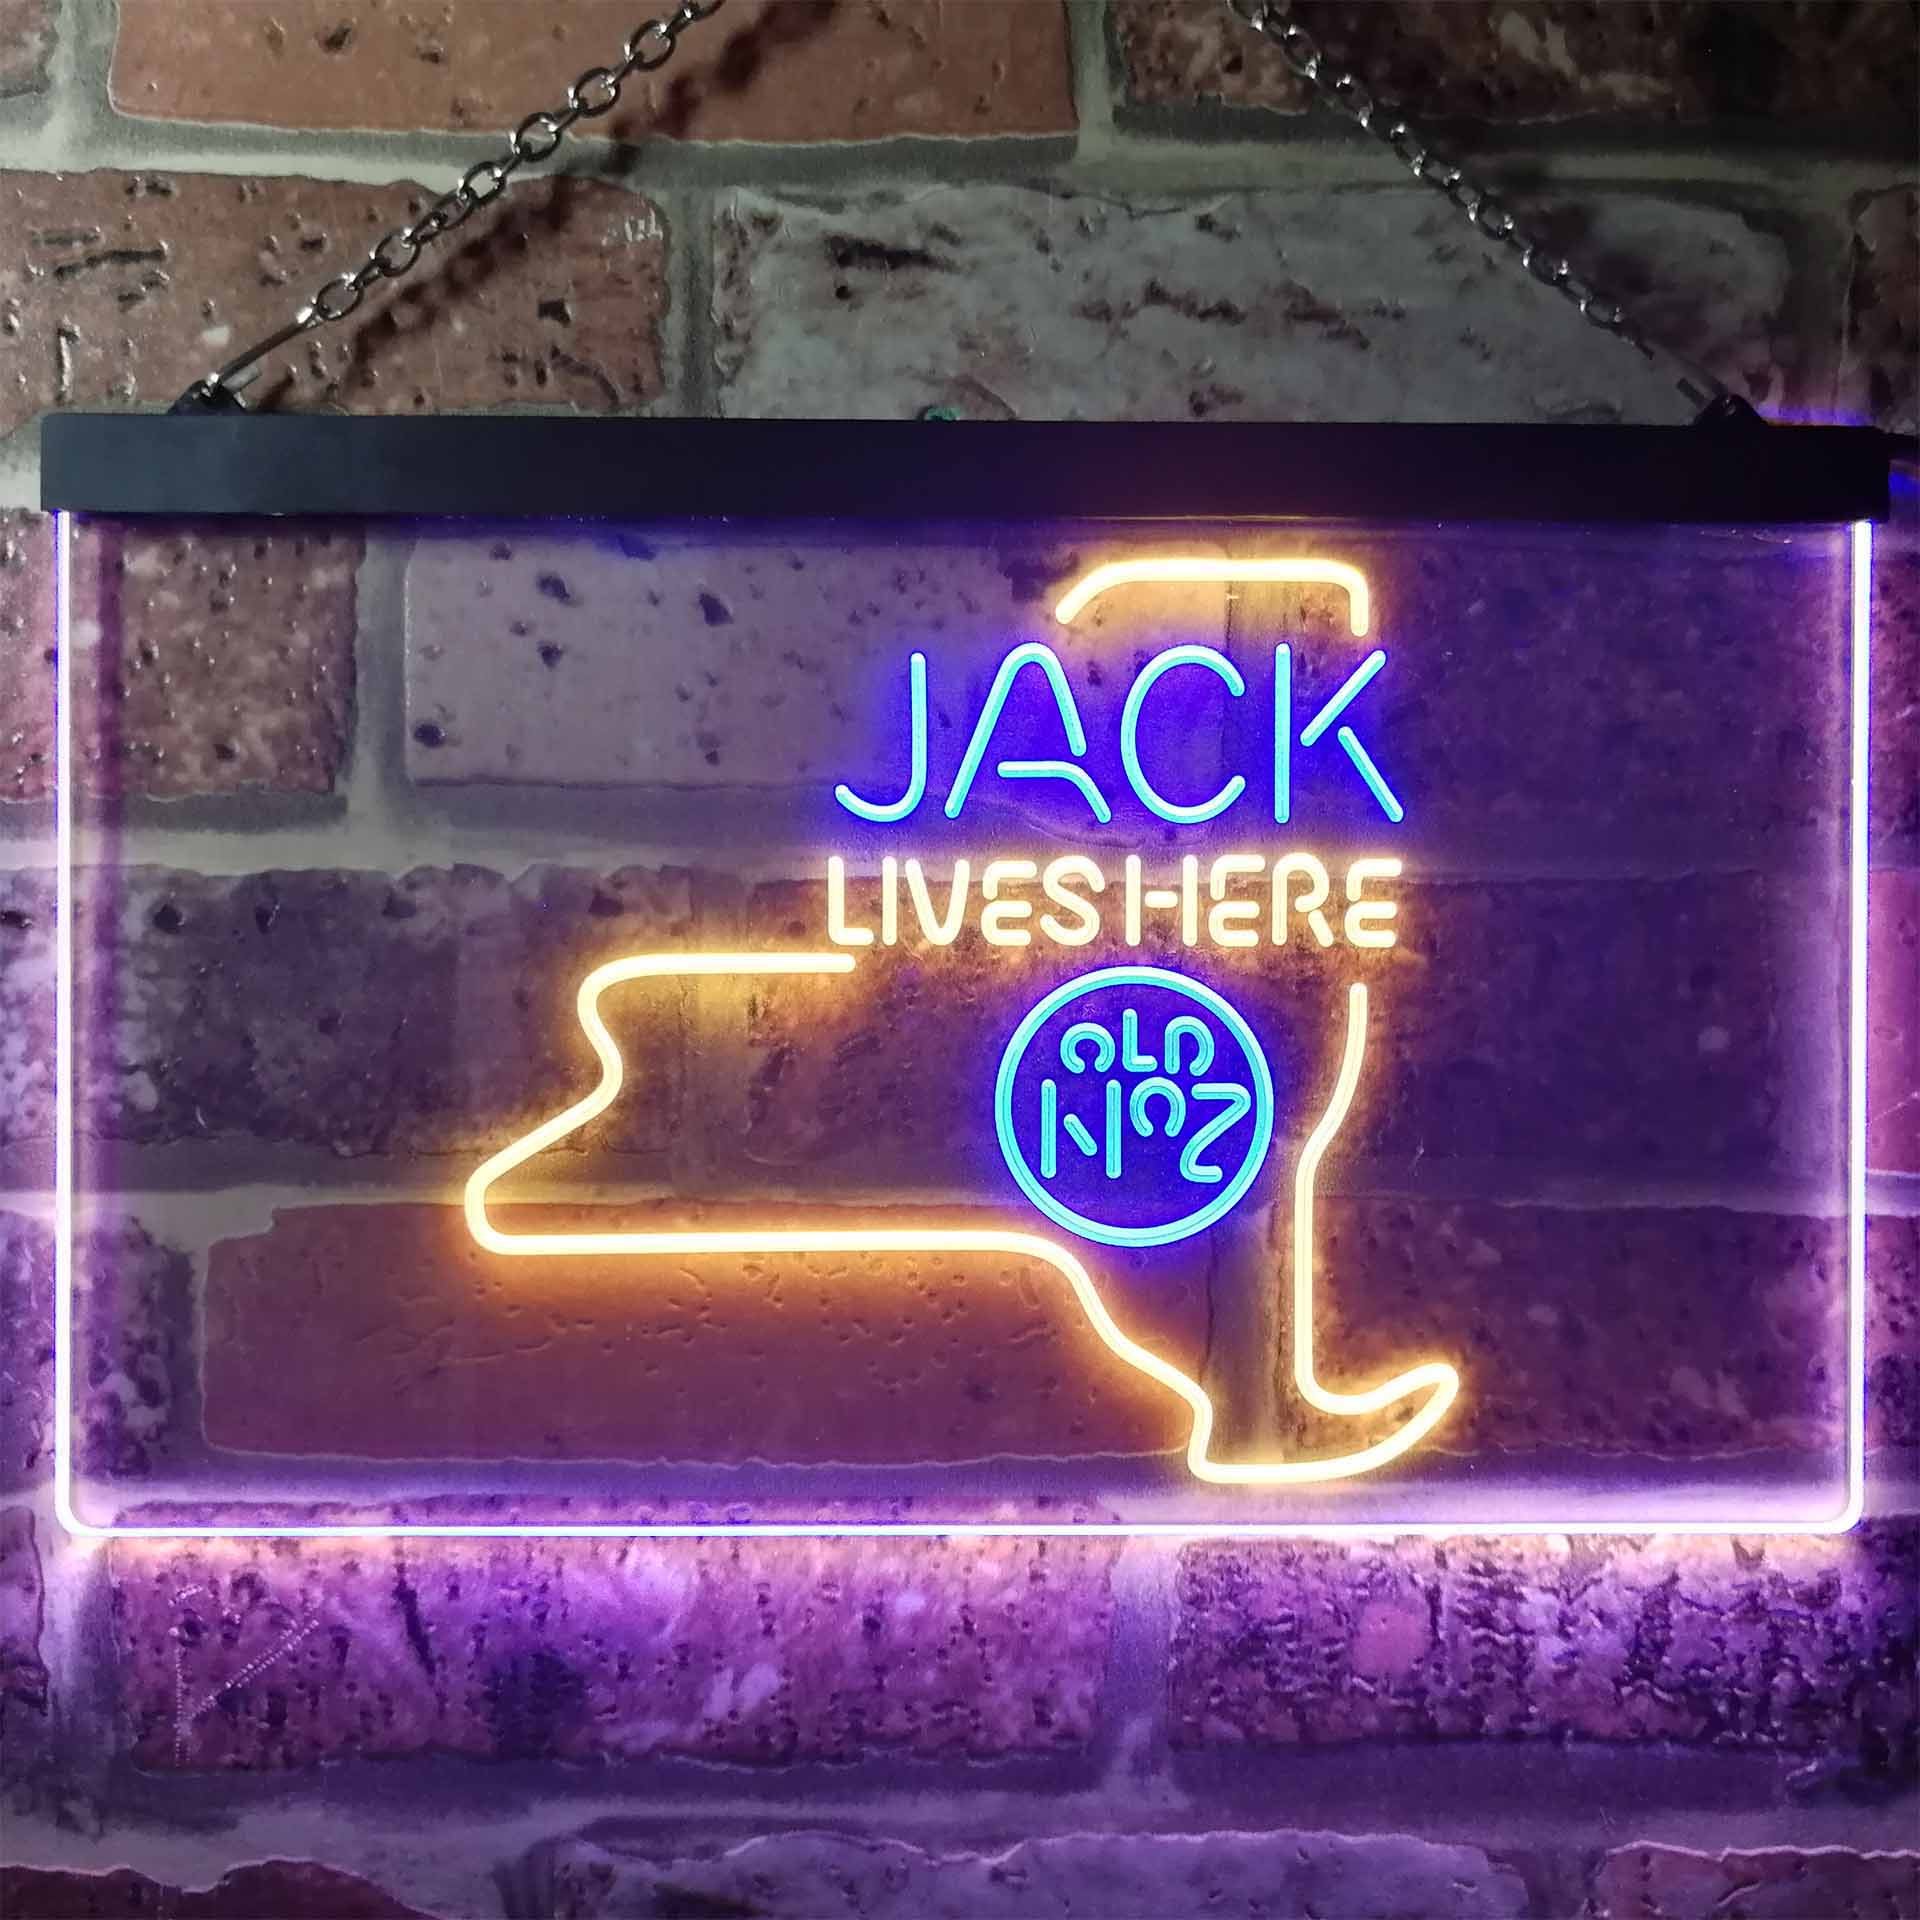 New York Jack Lives Here LED Neon Sign